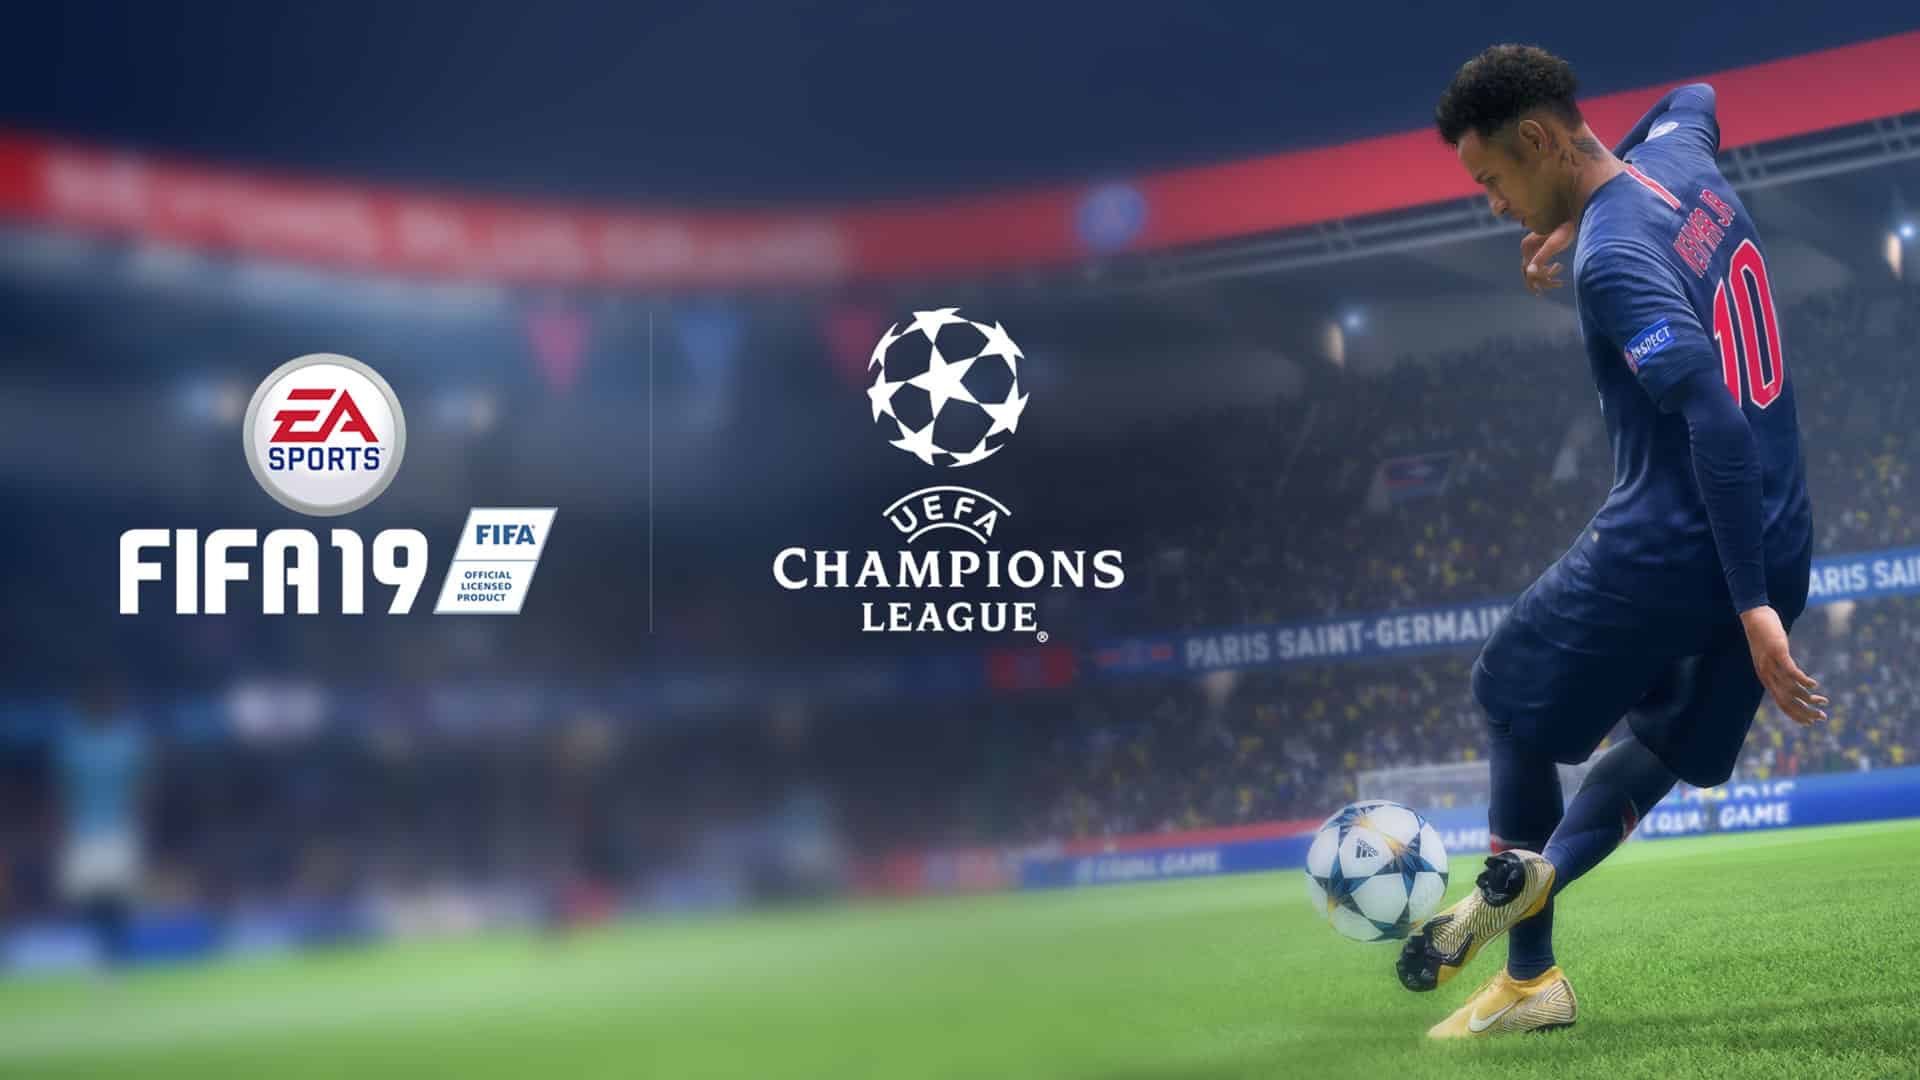 FIFA 19 echampions league